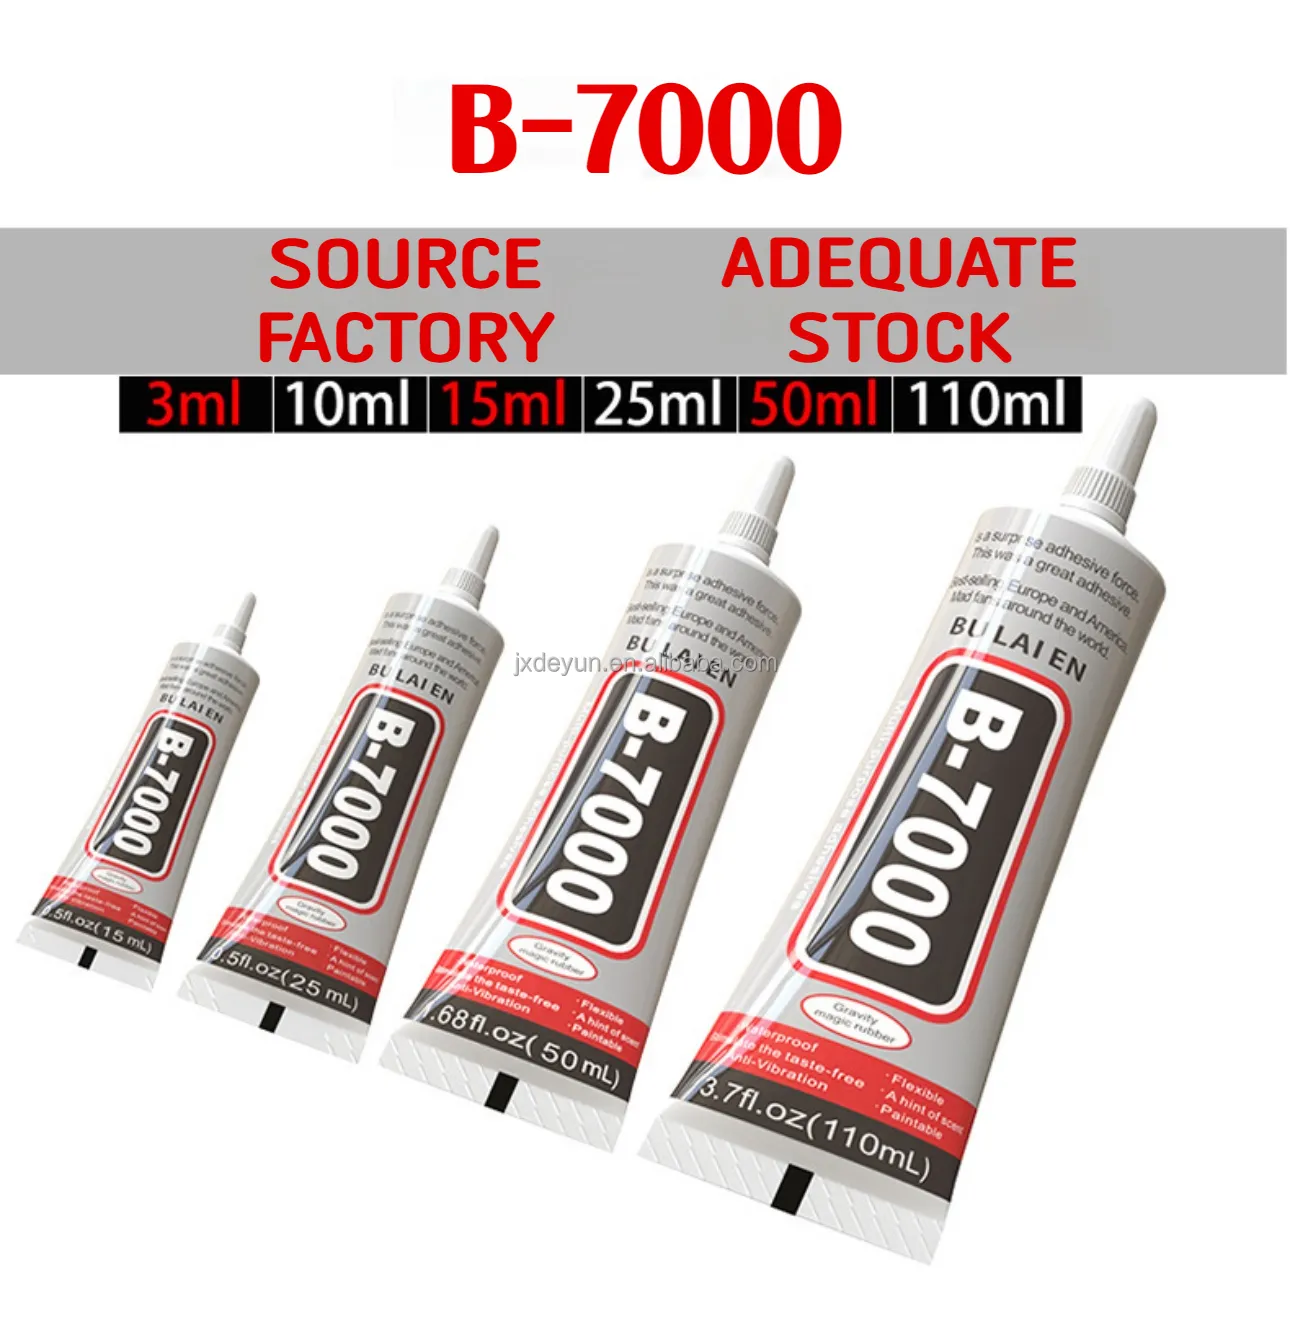 BU Lai En Multipurpose B7000 Adhesives Transparent Liquid Glue 10ml 25 ml 110ml DIY Craft Touch Screen Cell Phone Repair